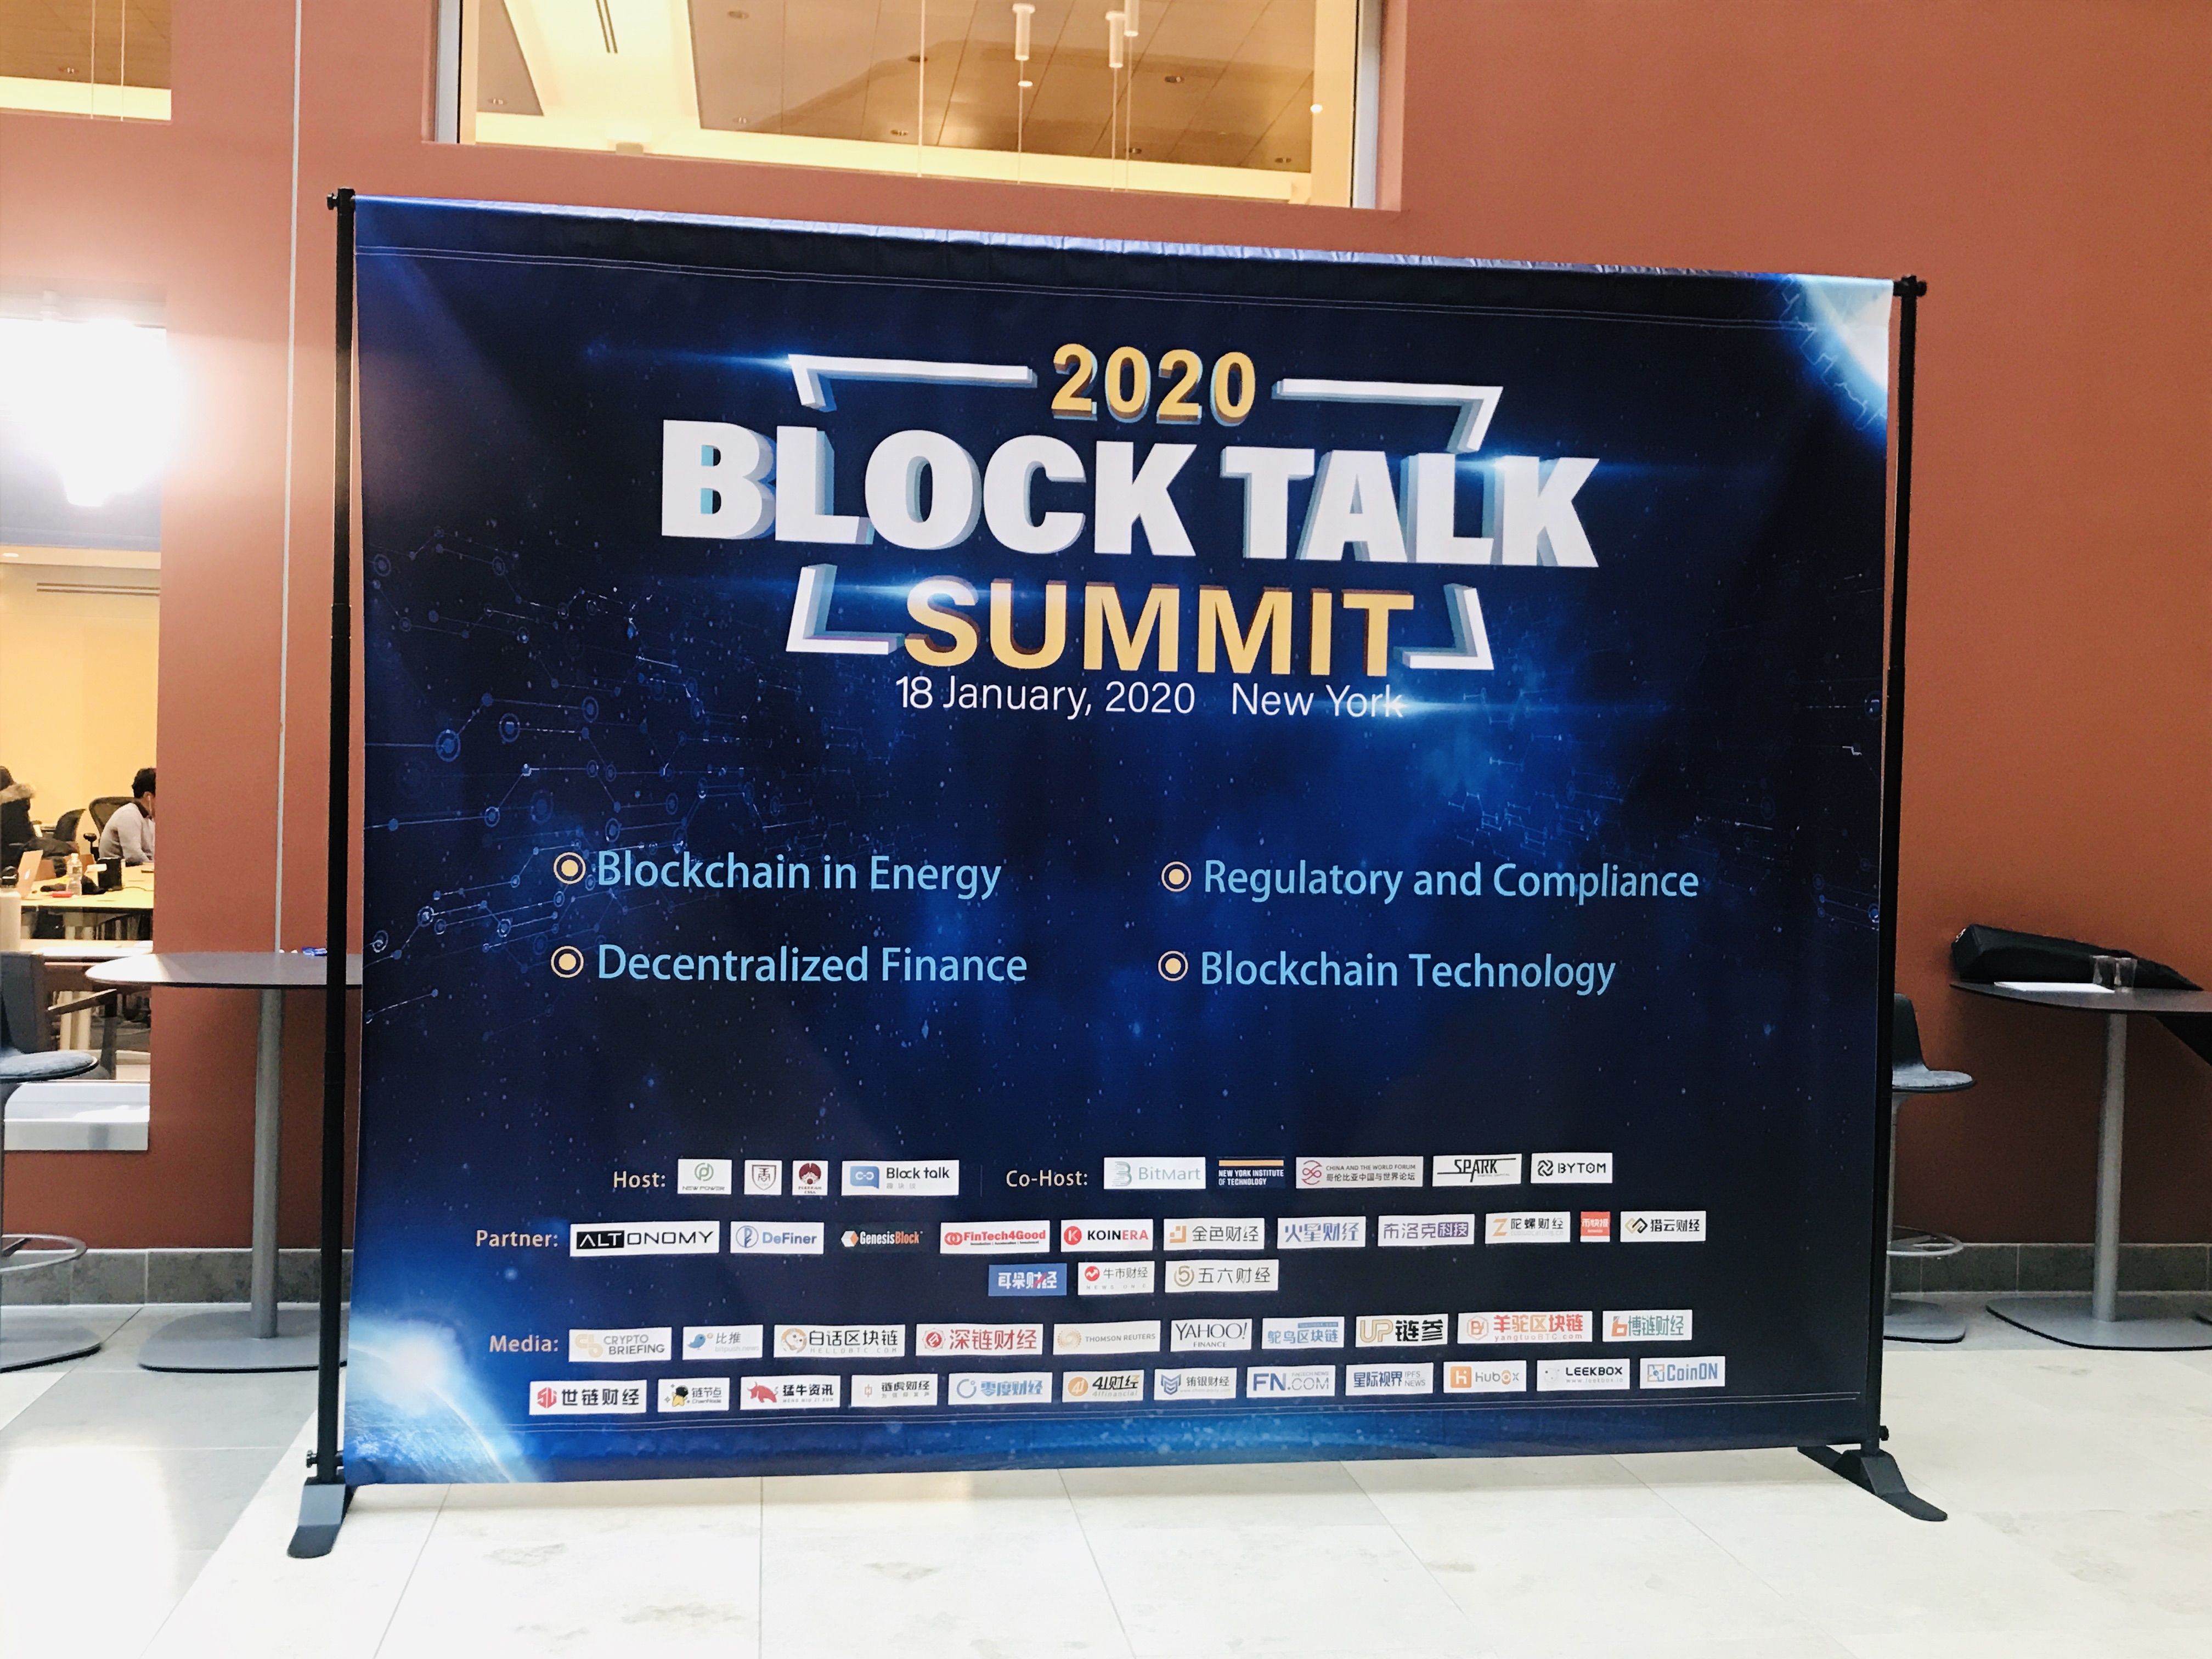 2020 Block Talk Summit, New York - Blockchain in Energy, Decentralized Finance, Regulatory and Compliance, Blockchain Technology